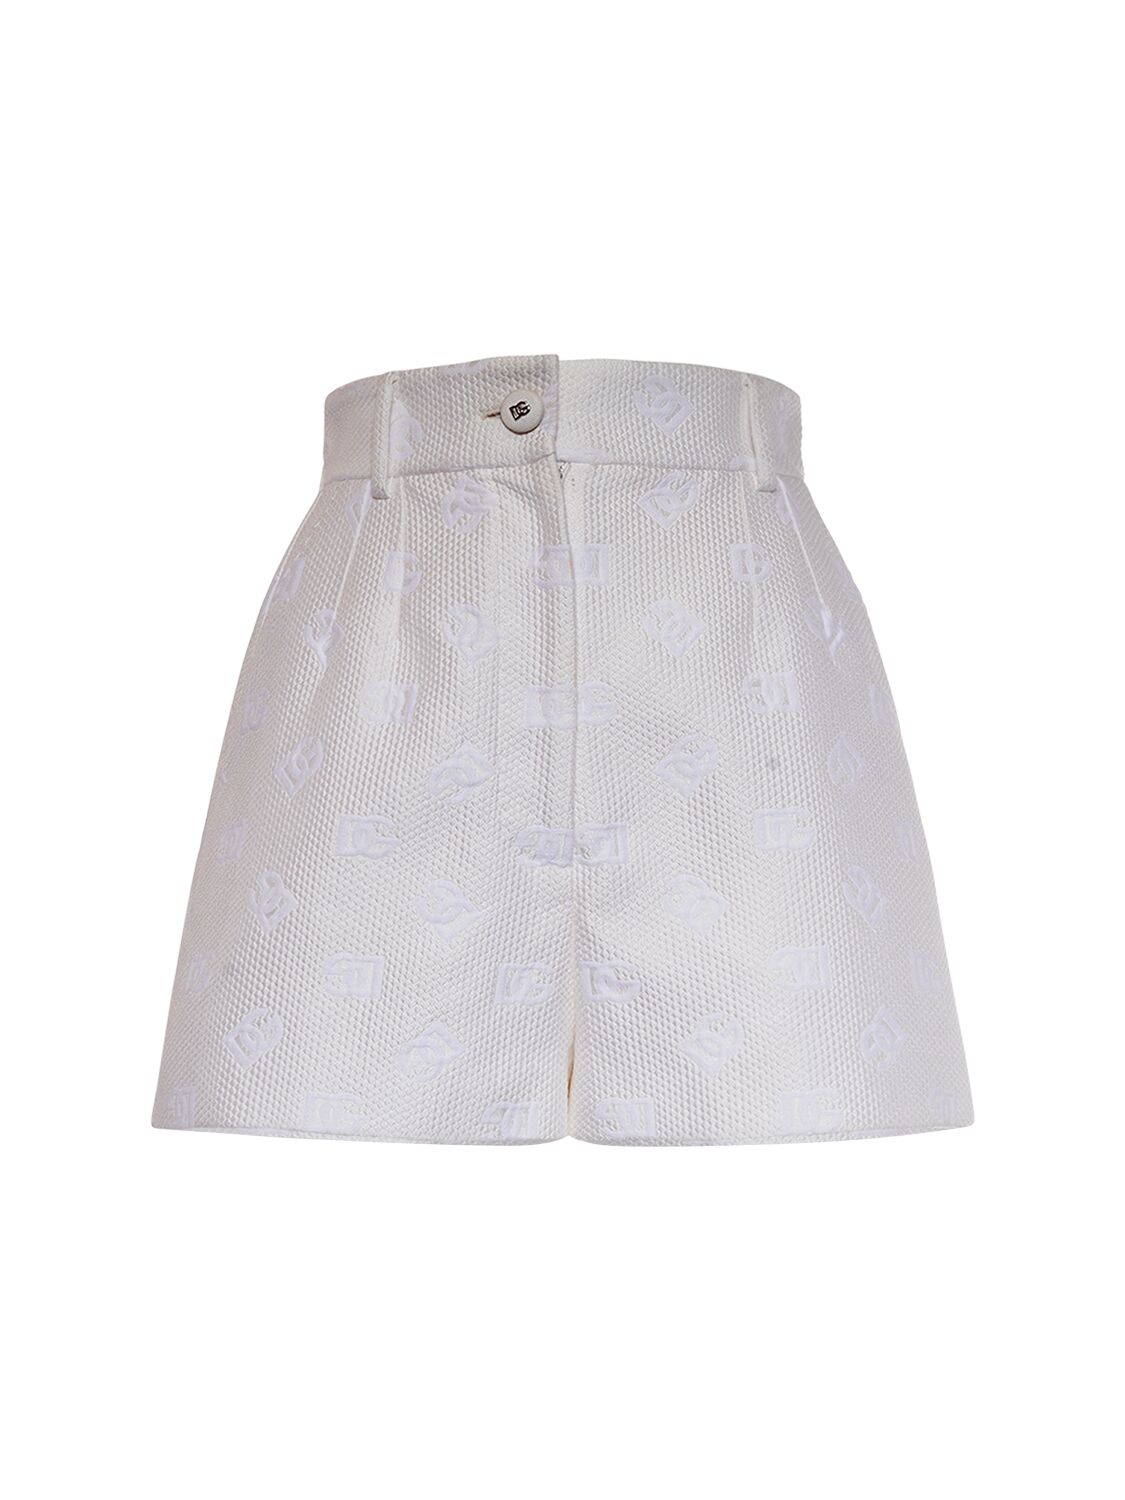 Dolce & Gabbana Dg Monogram提花短裤 In White